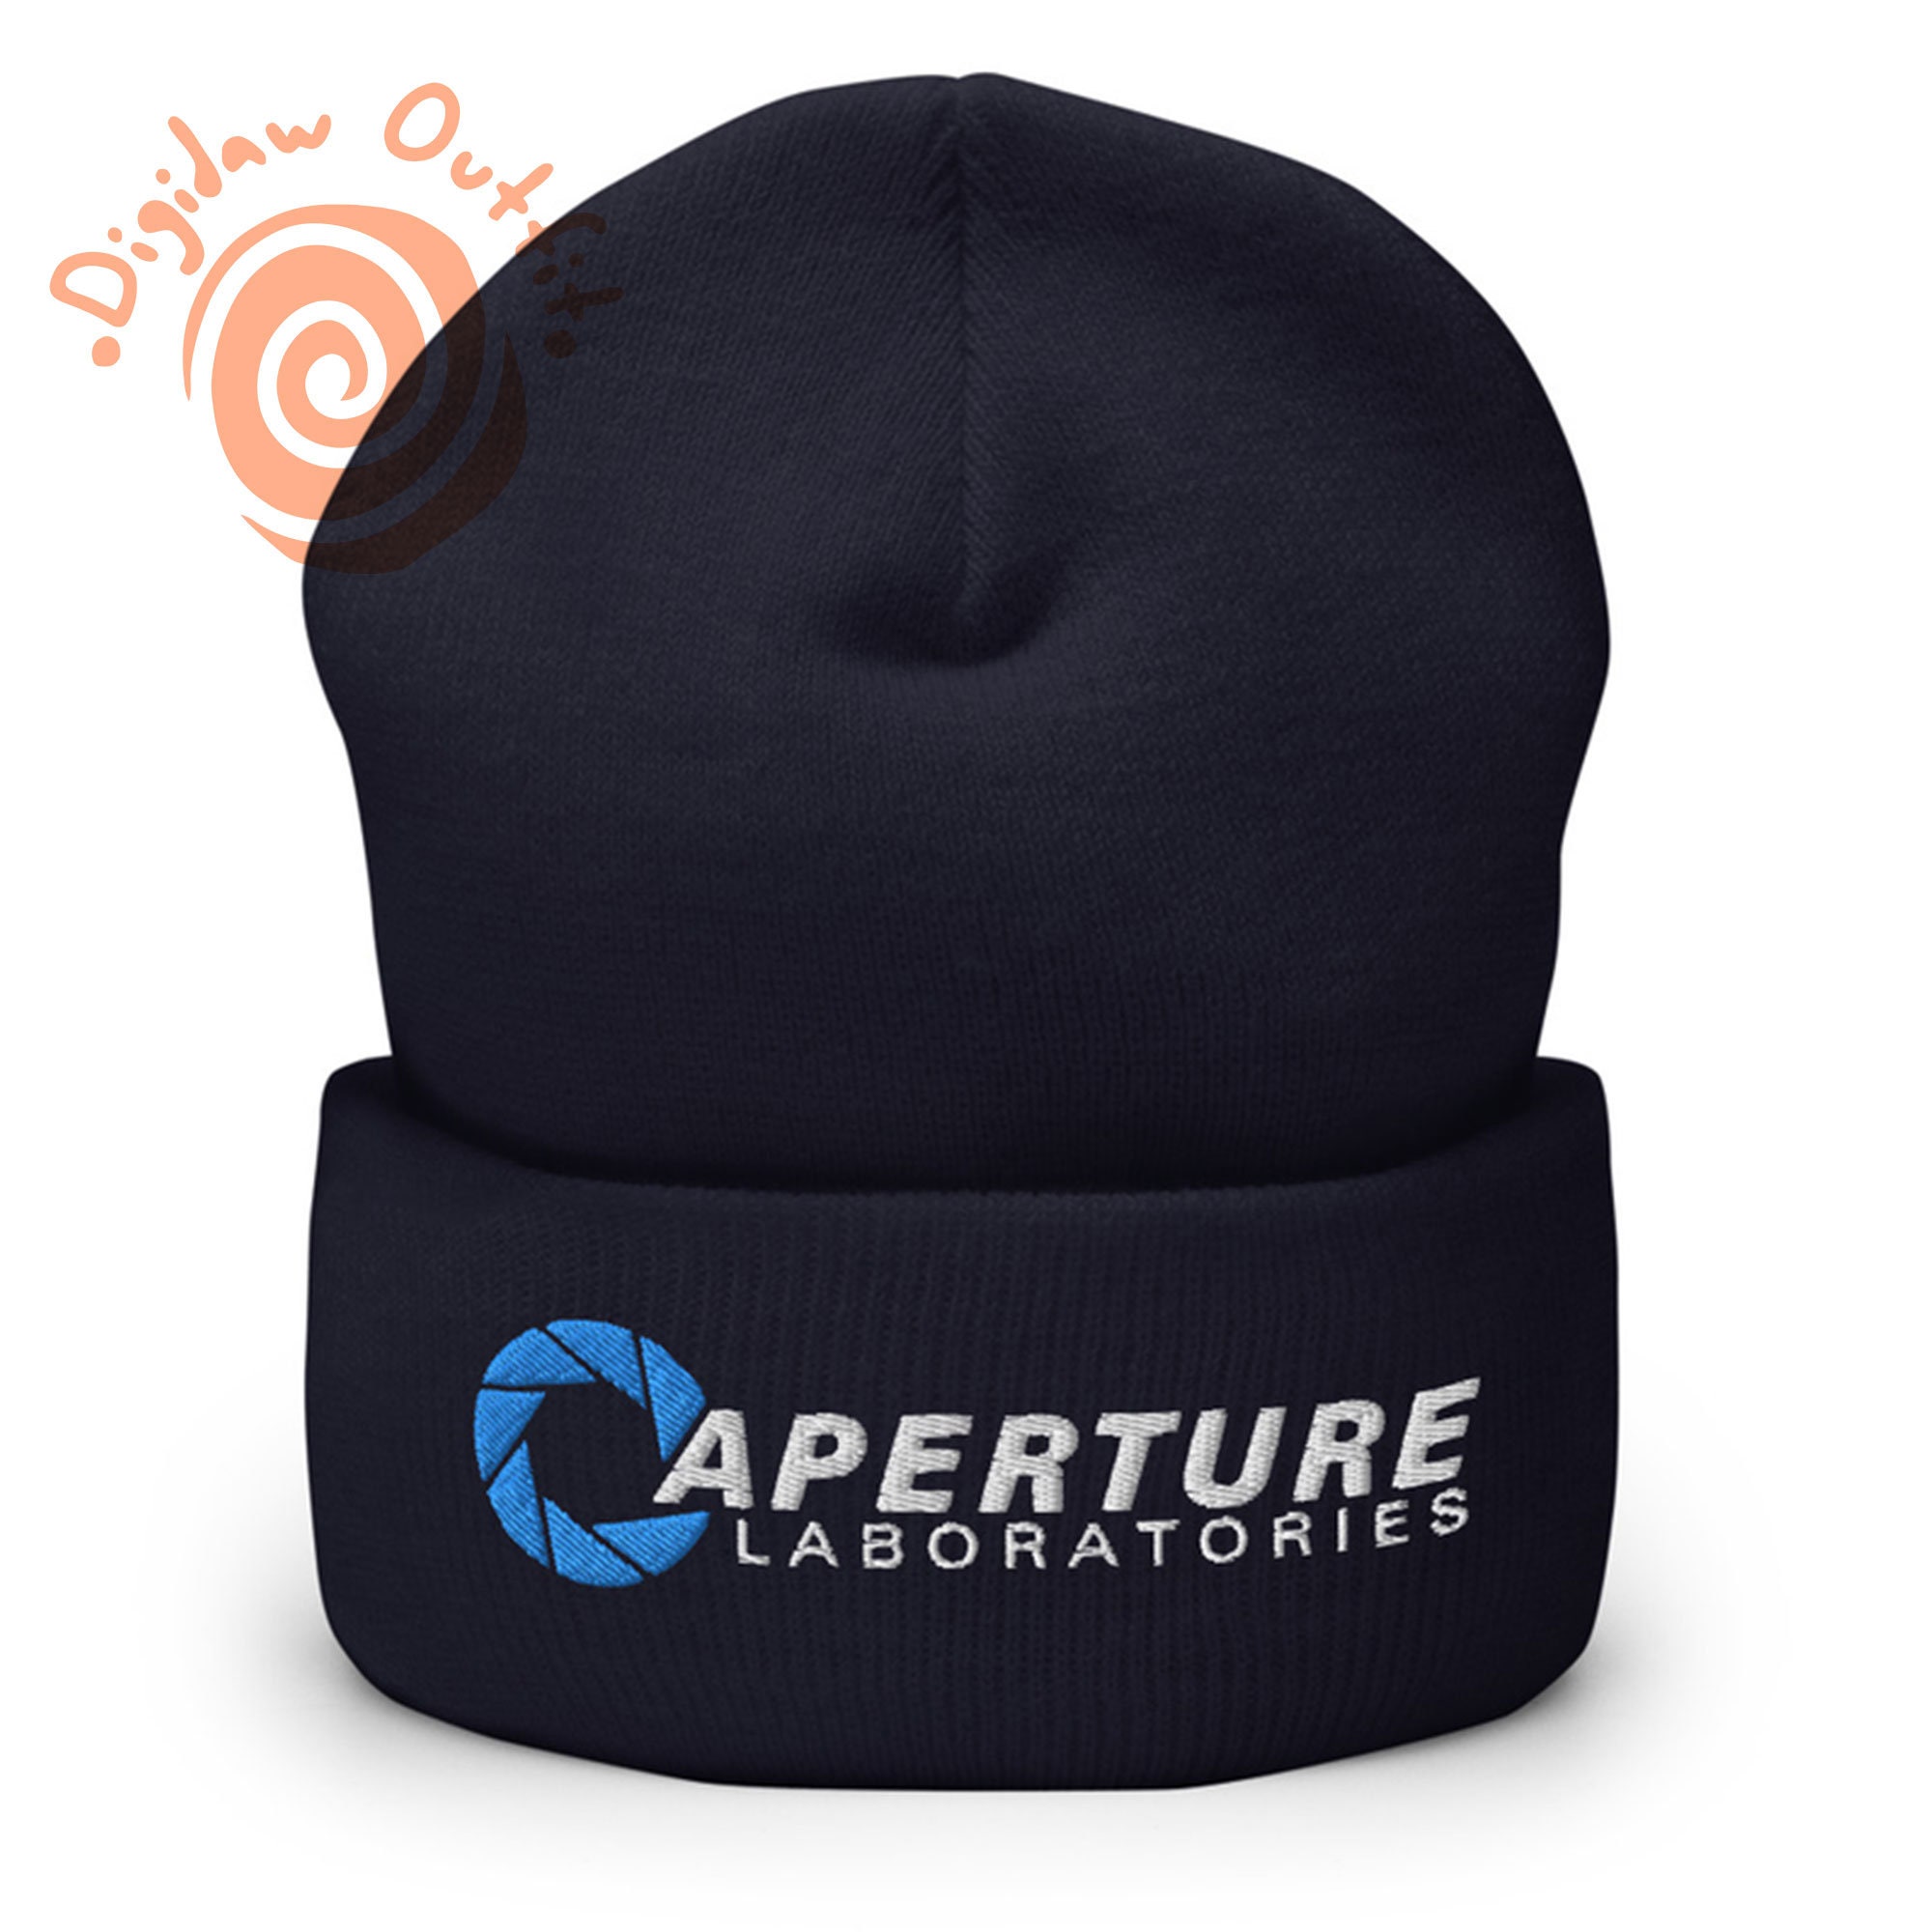 NA Aperture Science Portal Beanie Hat Winter Warm Knit Skull Cap for Boys Girls Black 